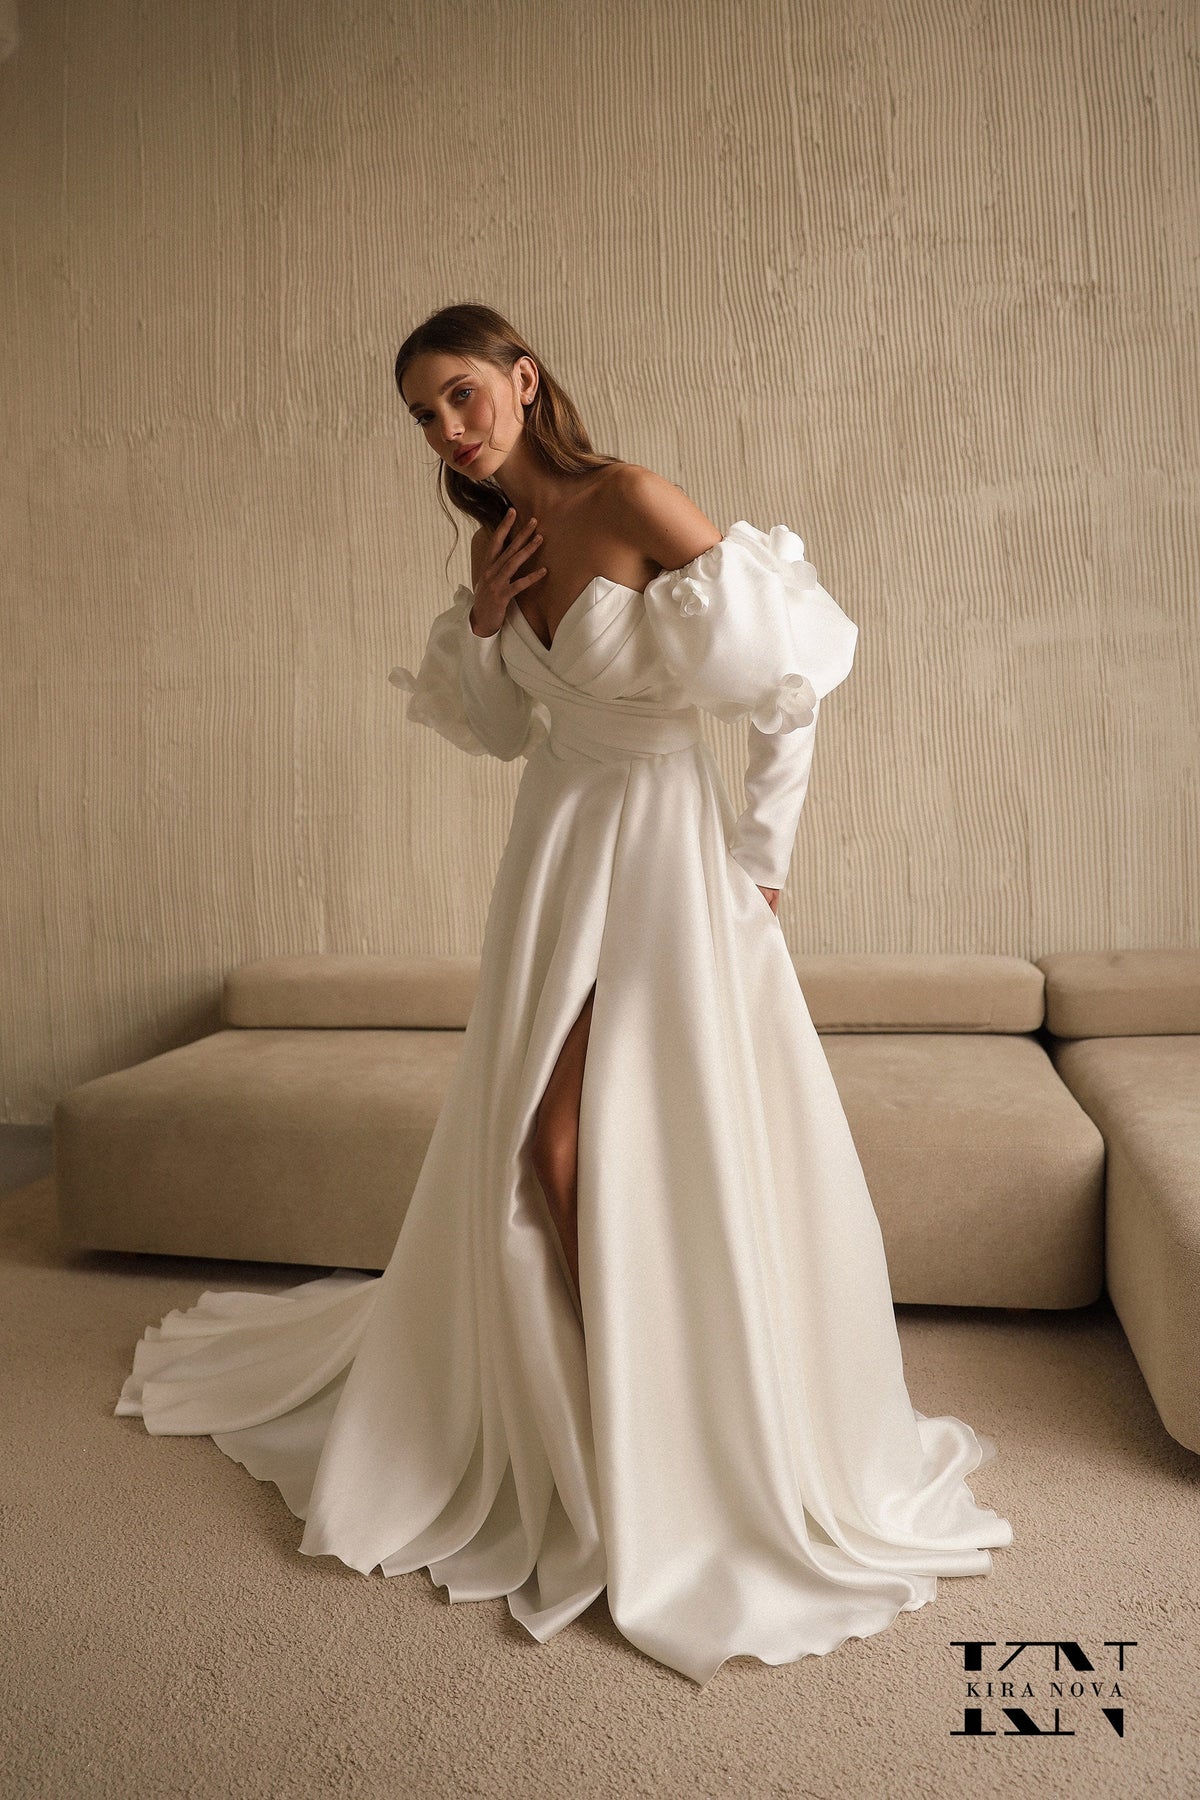 Classic Sleeveless Strapless Wedding Dress Off White Bridal Gown Full Aline With Train Corset Back Dress Sweetheart Neckline Side Slit